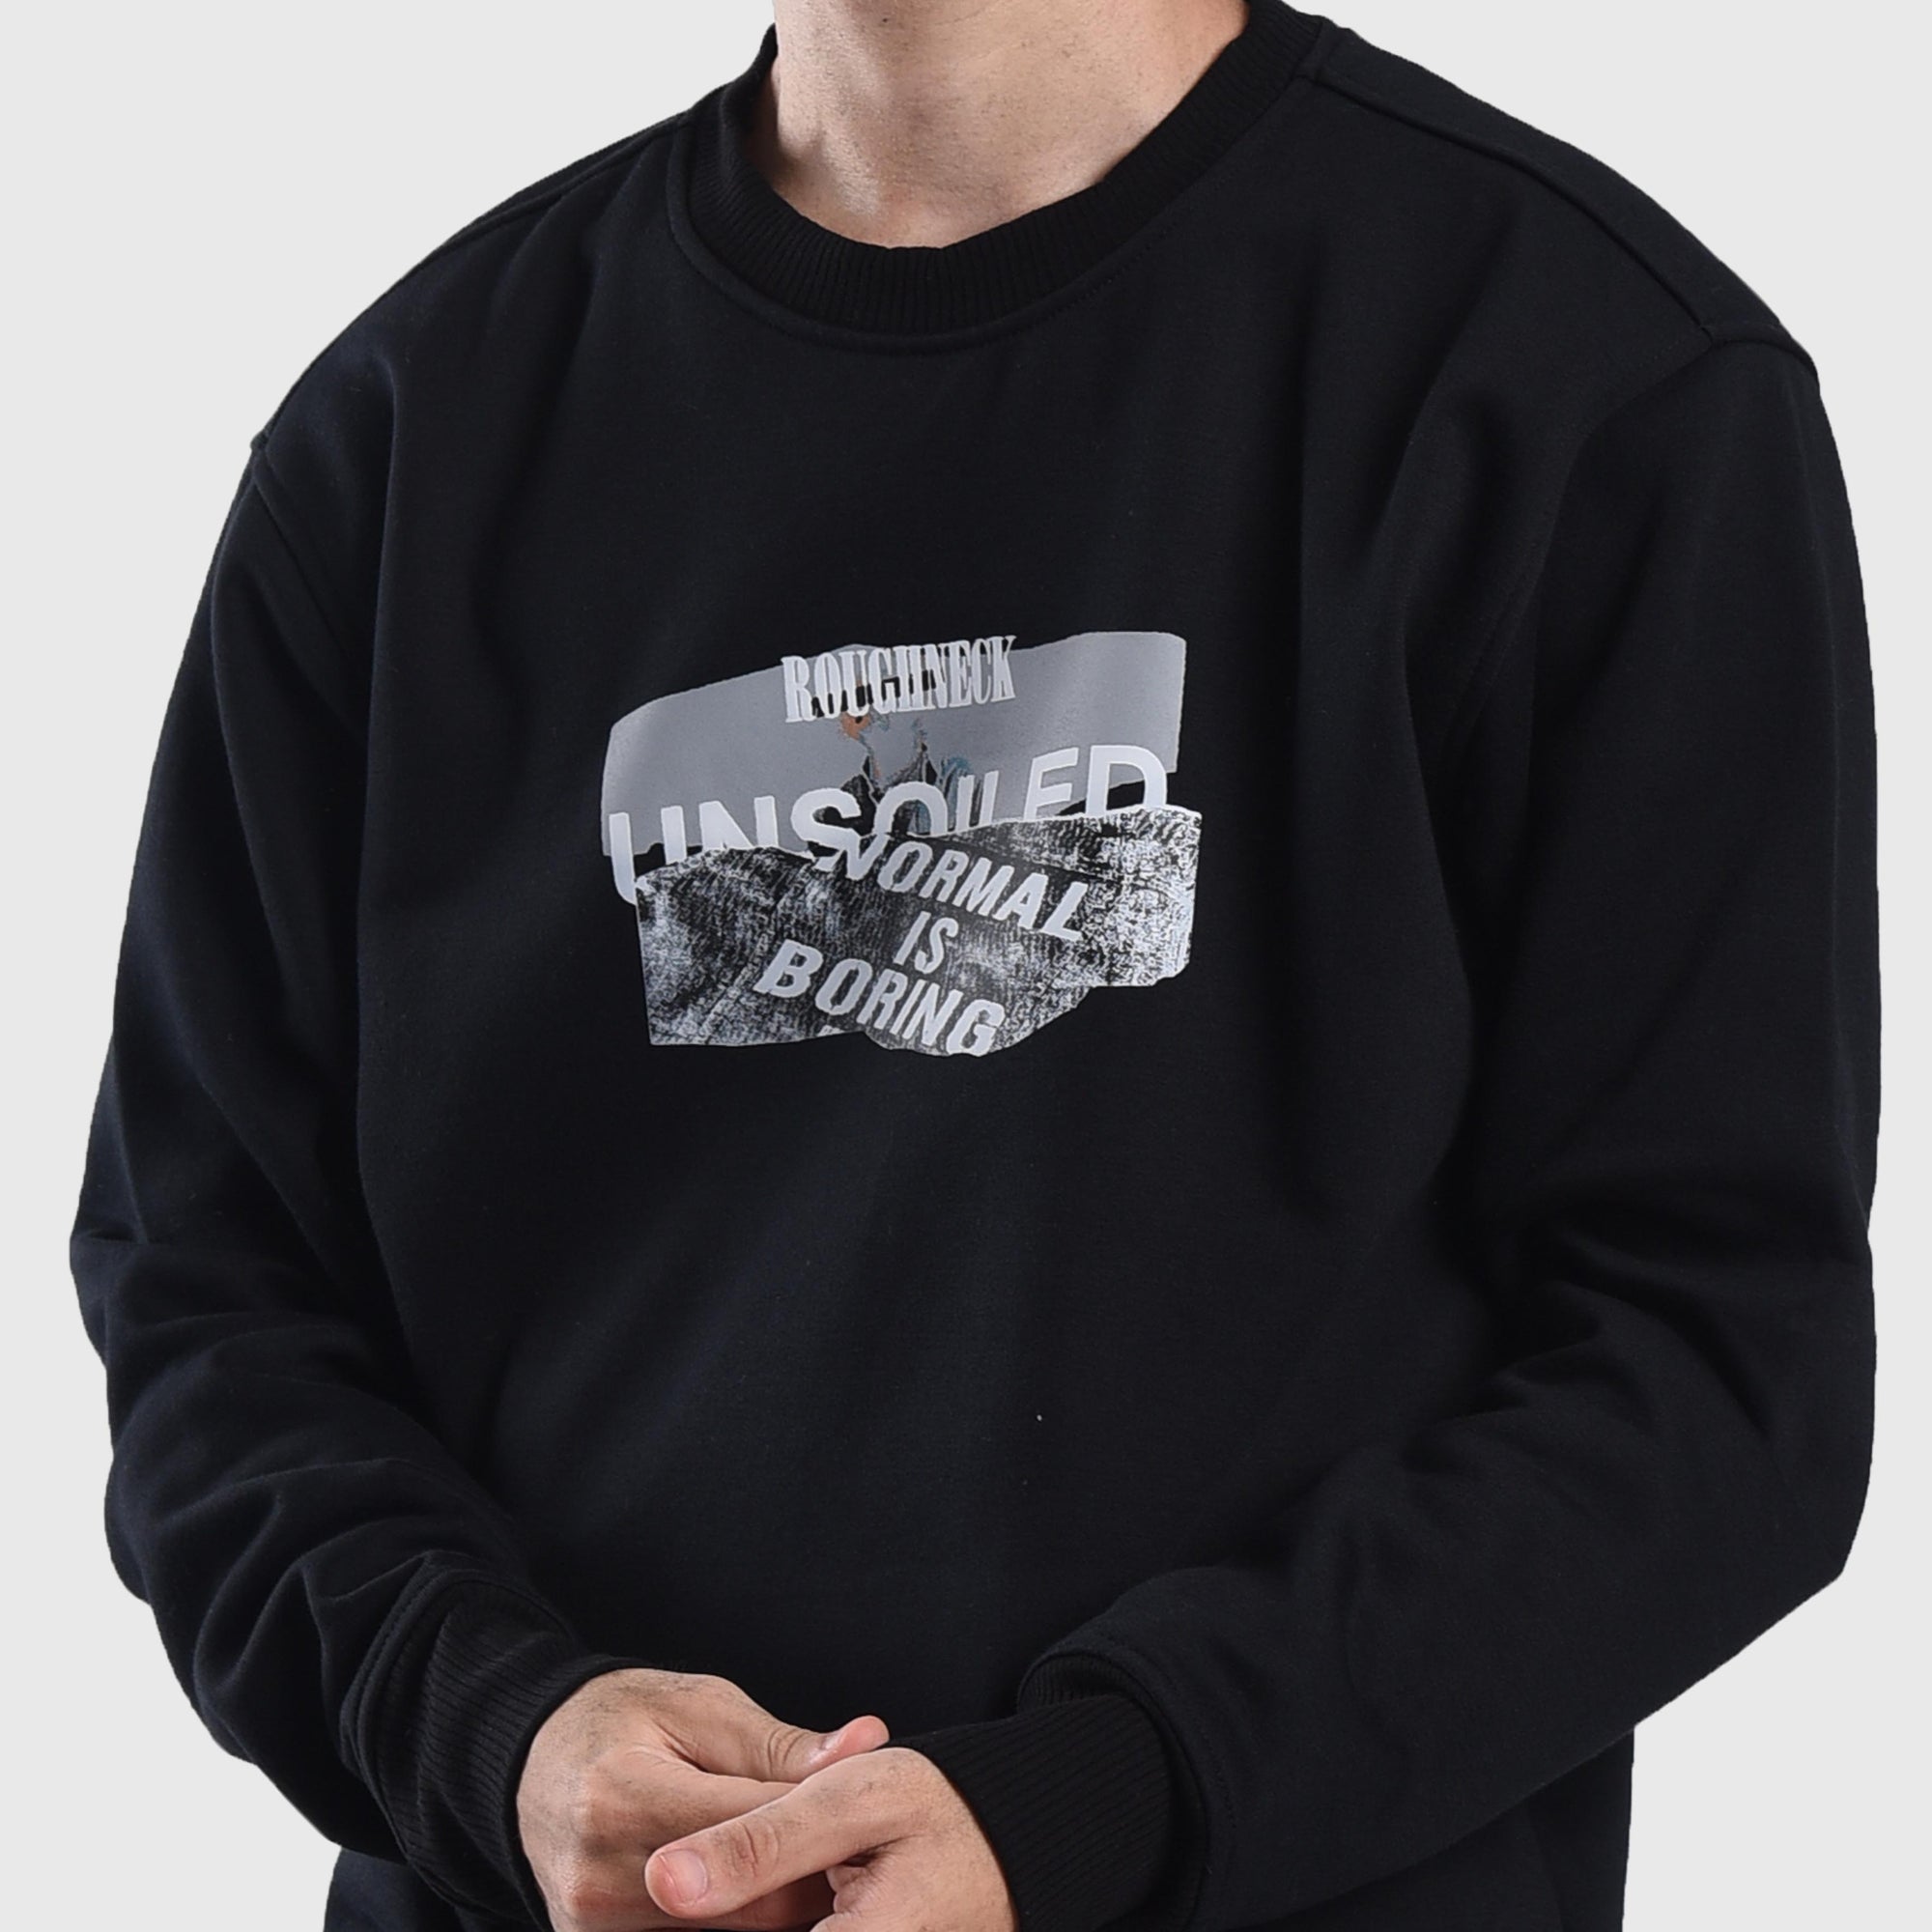 Roughneck SS042 Black Unsoiled Sweatshirt